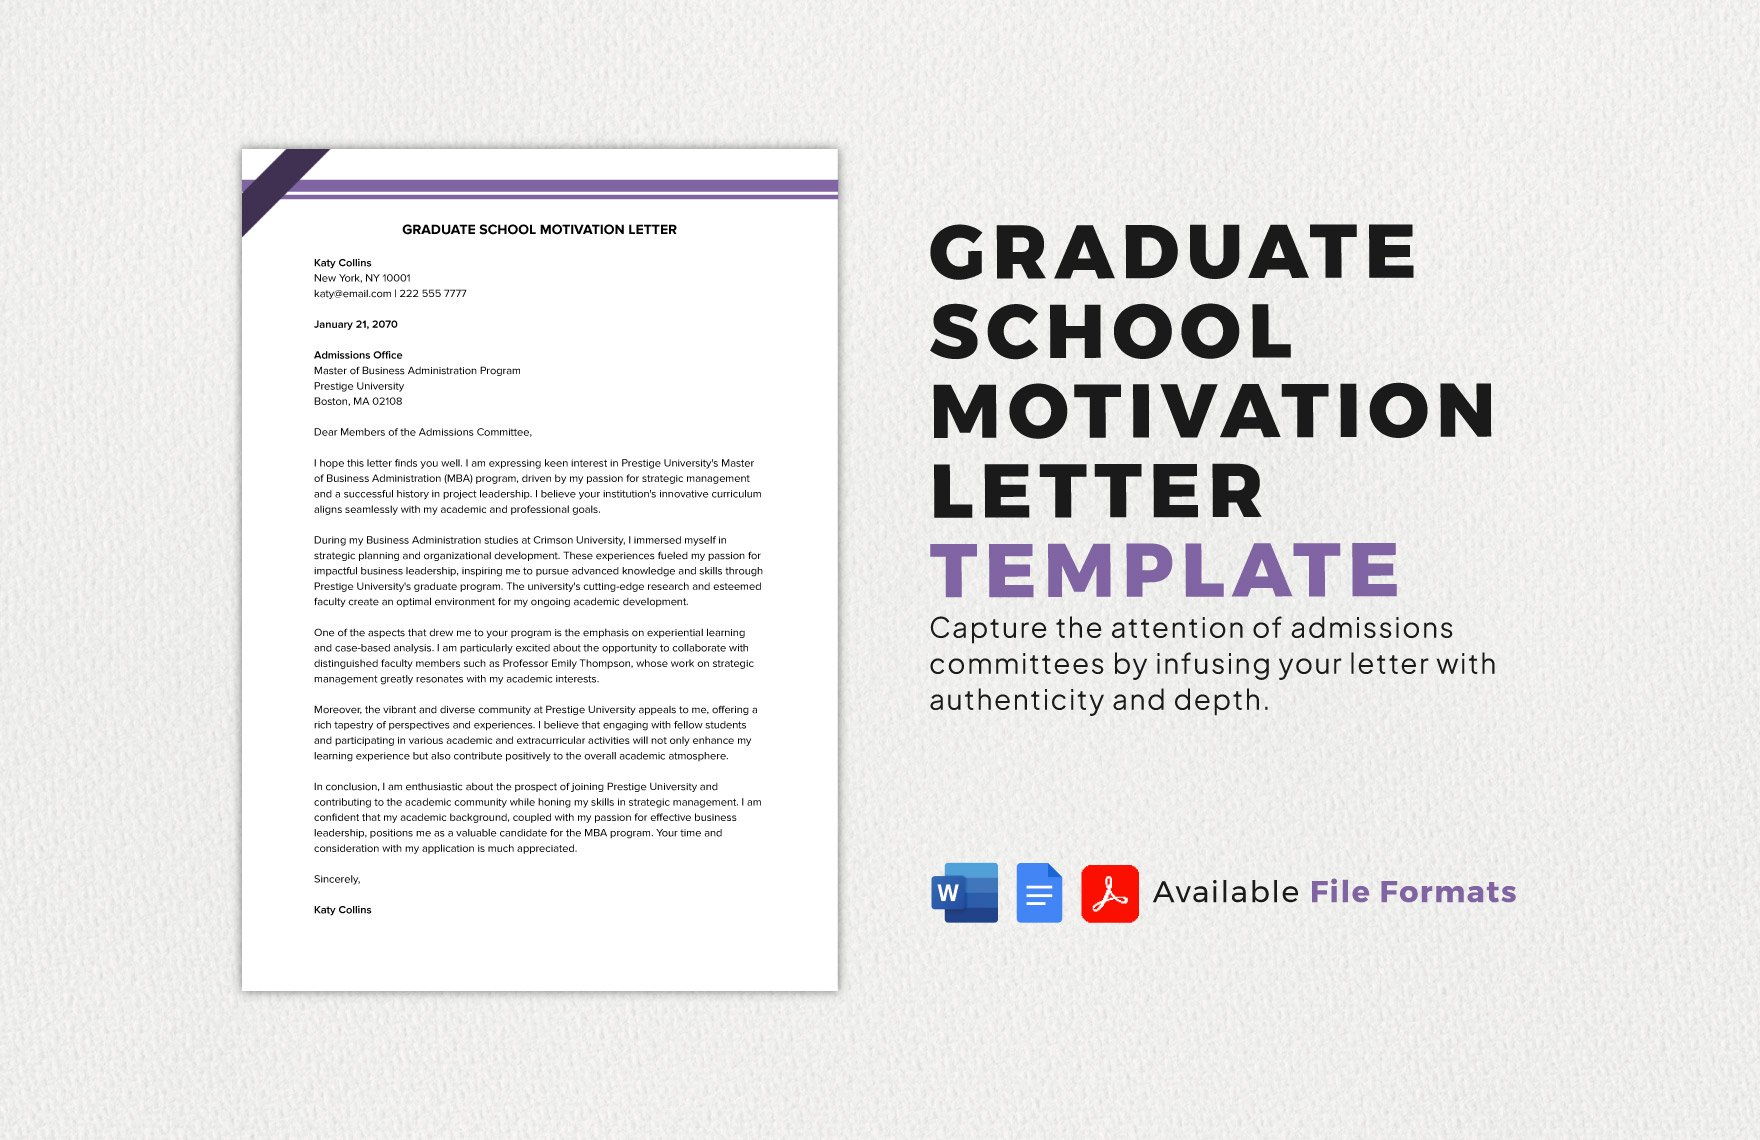 Graduate School Motivation Letter Template